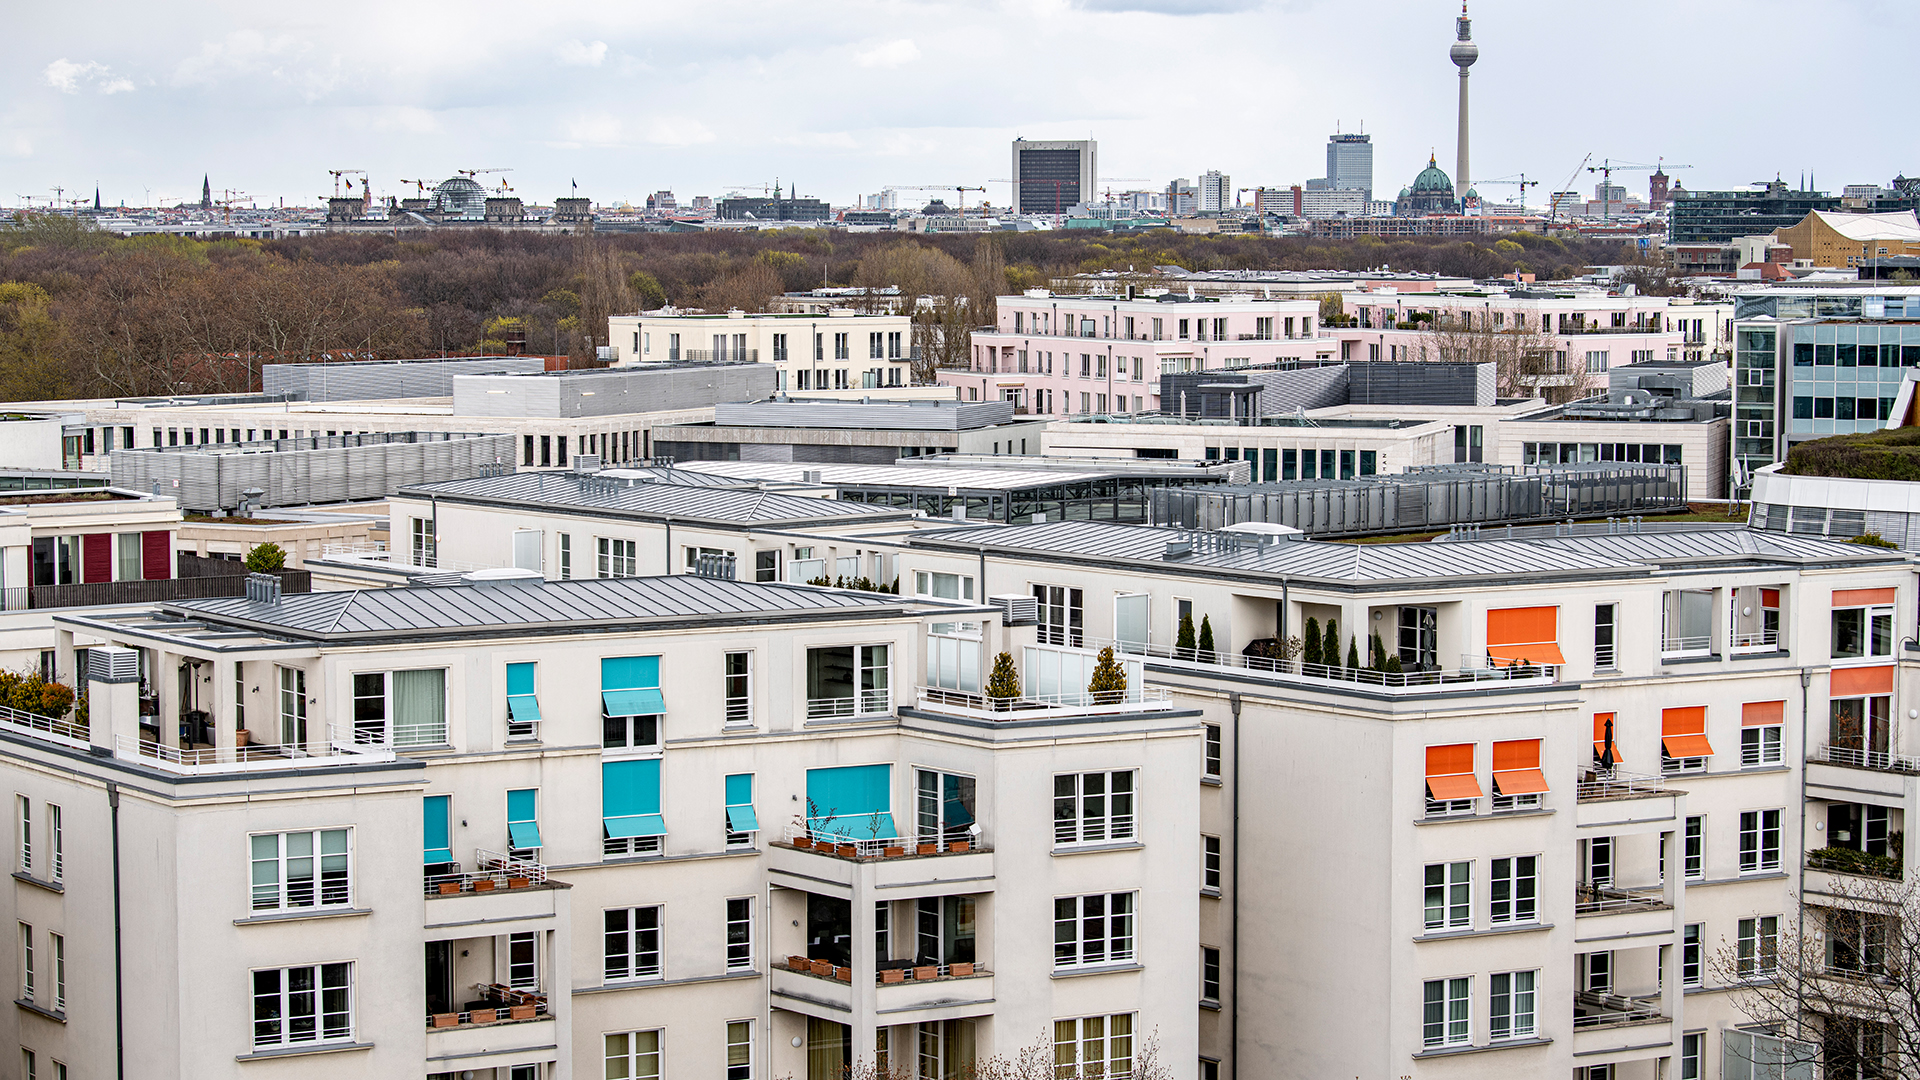 Wohnhäuser in Berlin | dpa